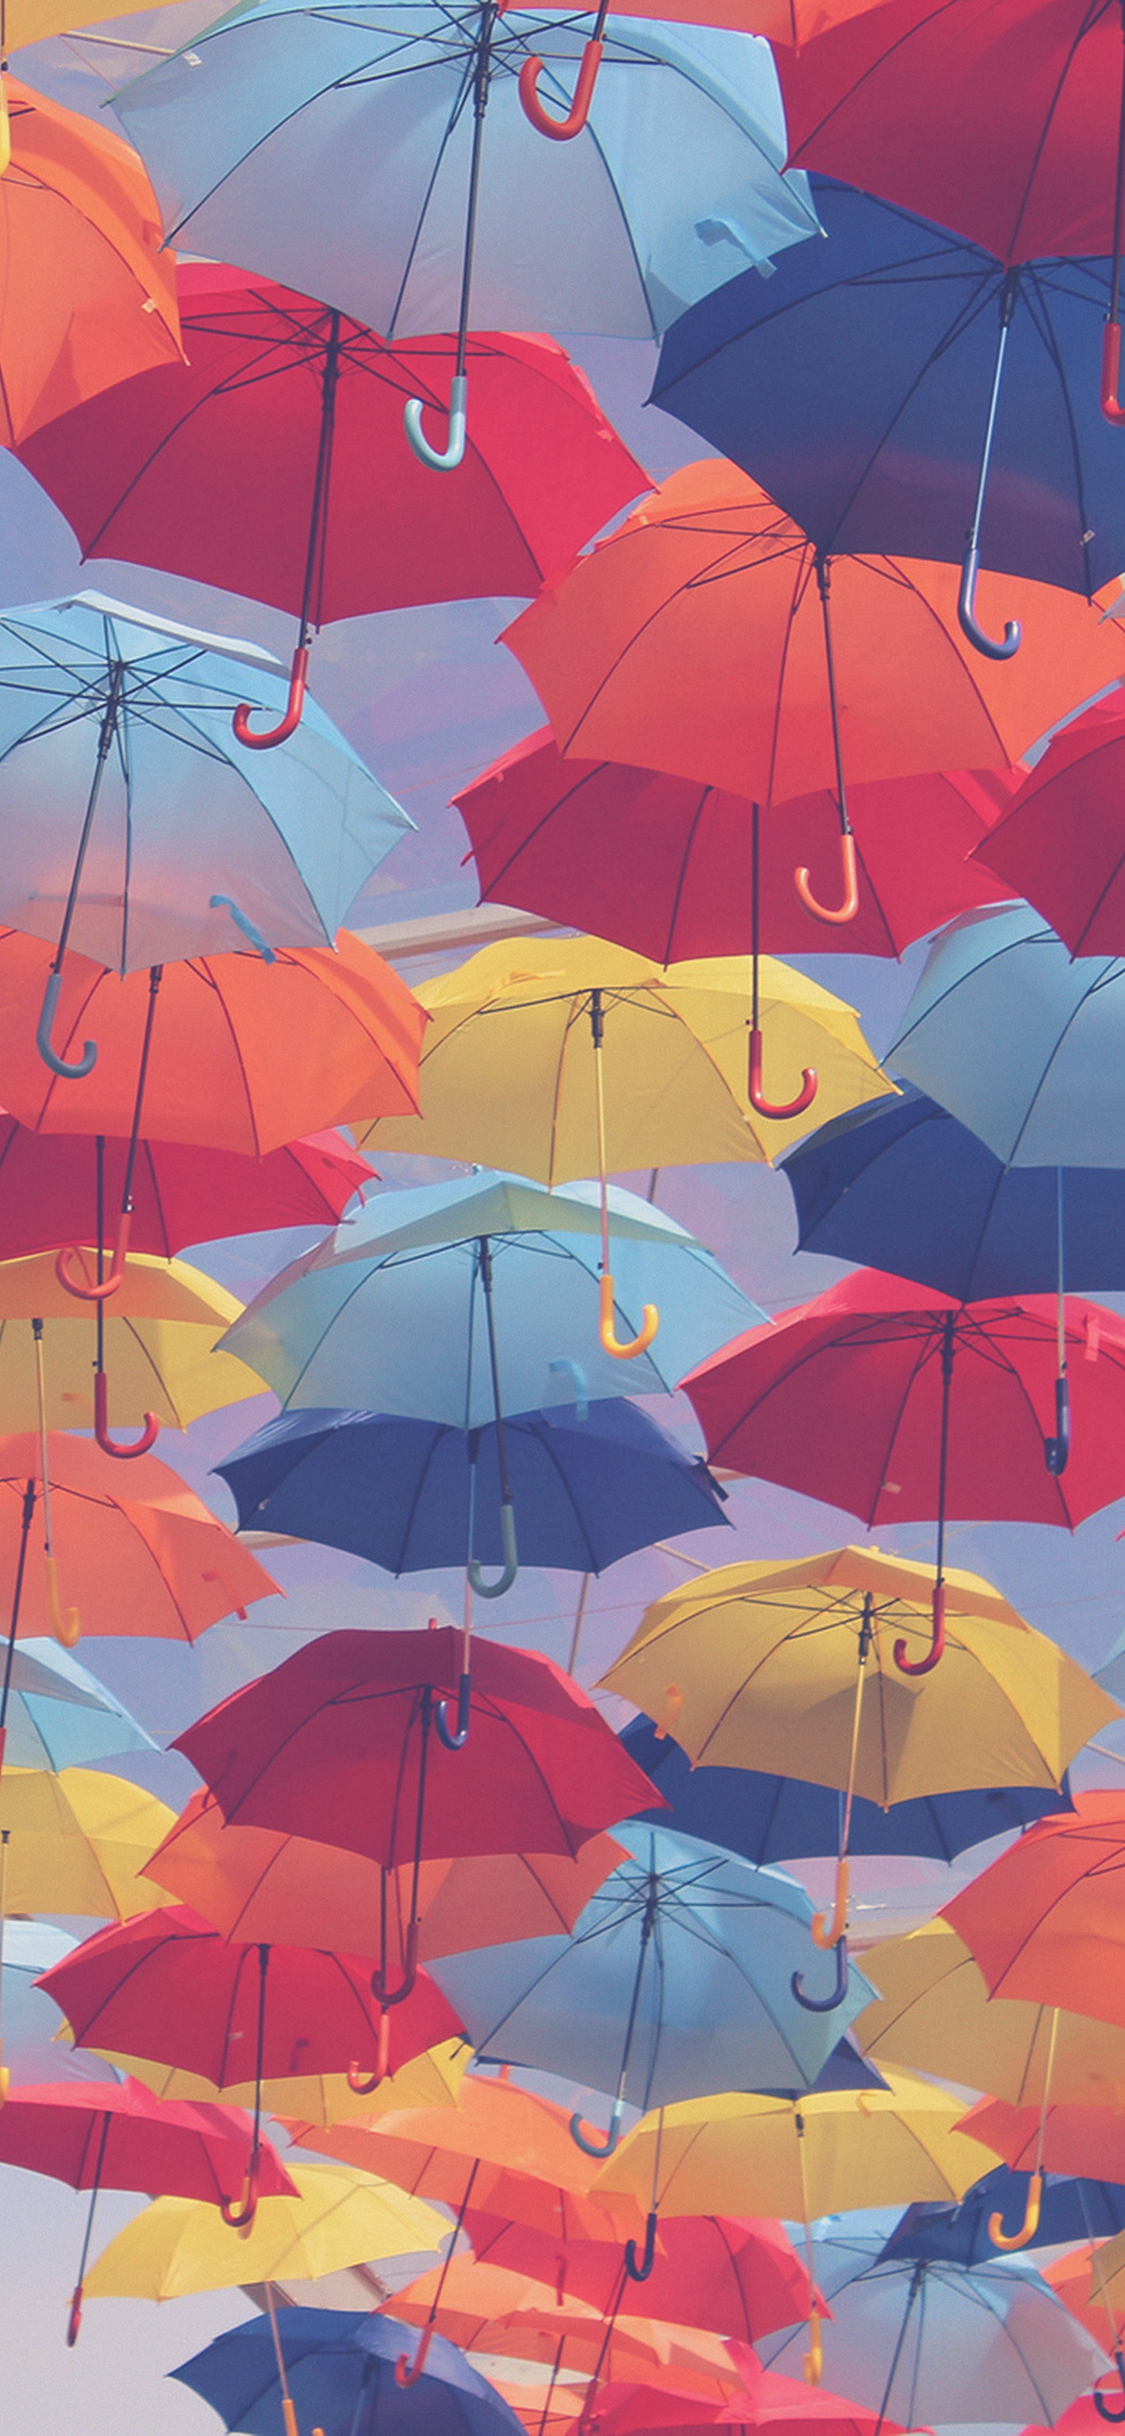 Umbrella Party Color Pattern iPhone wallpaper 